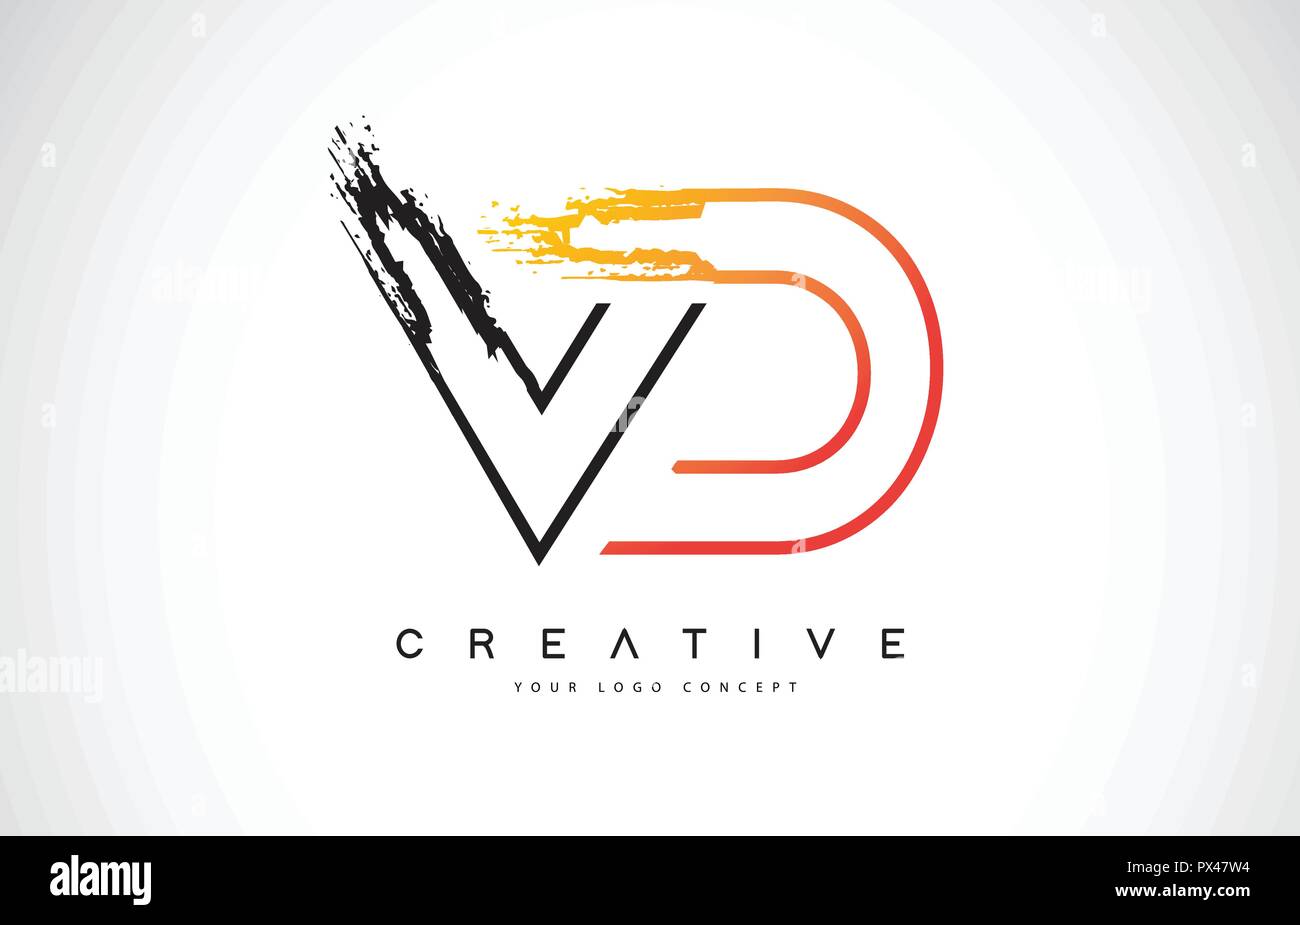 VD Creative Modern Logo Design Vetor with Orange and Black Colors. Monogram Stroke Letter Design. Stock Vector